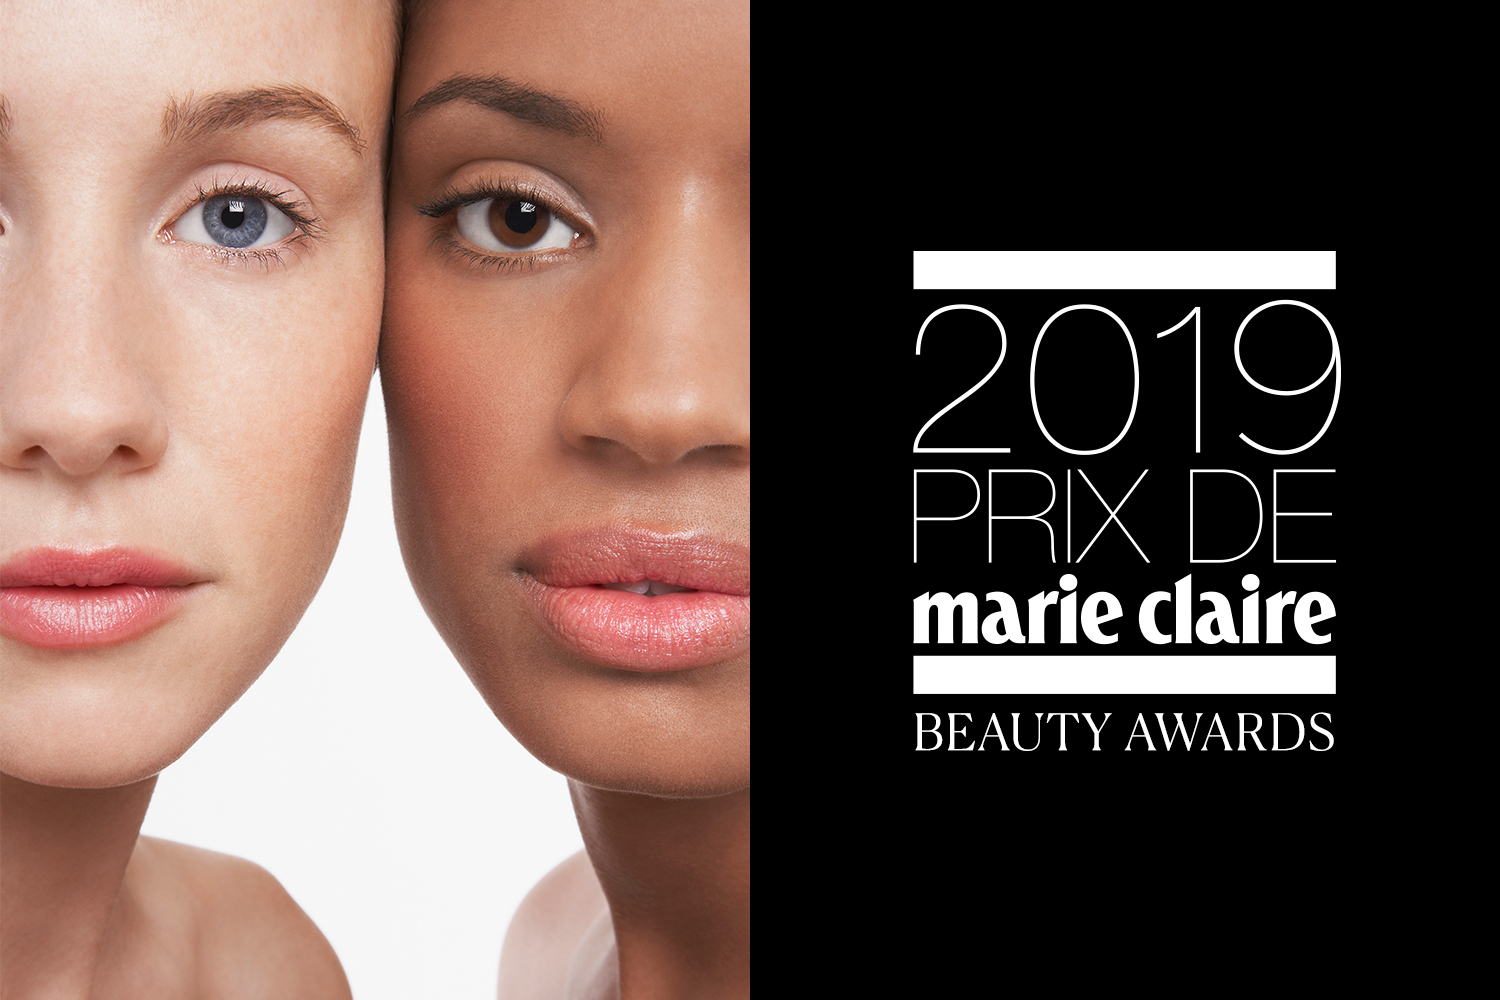 2019 Prix de marie claire Beauty Awards – Call For Entries